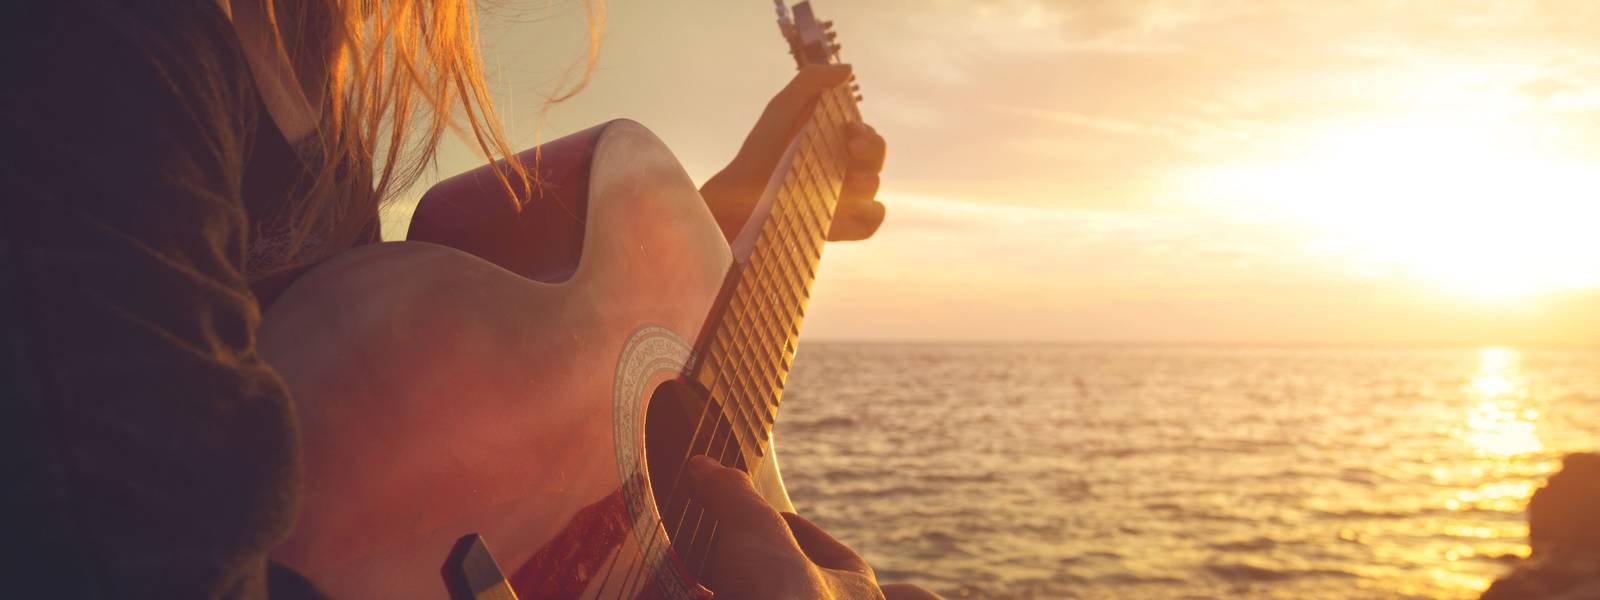 Beautiful young woman playing guitar on sunset beach